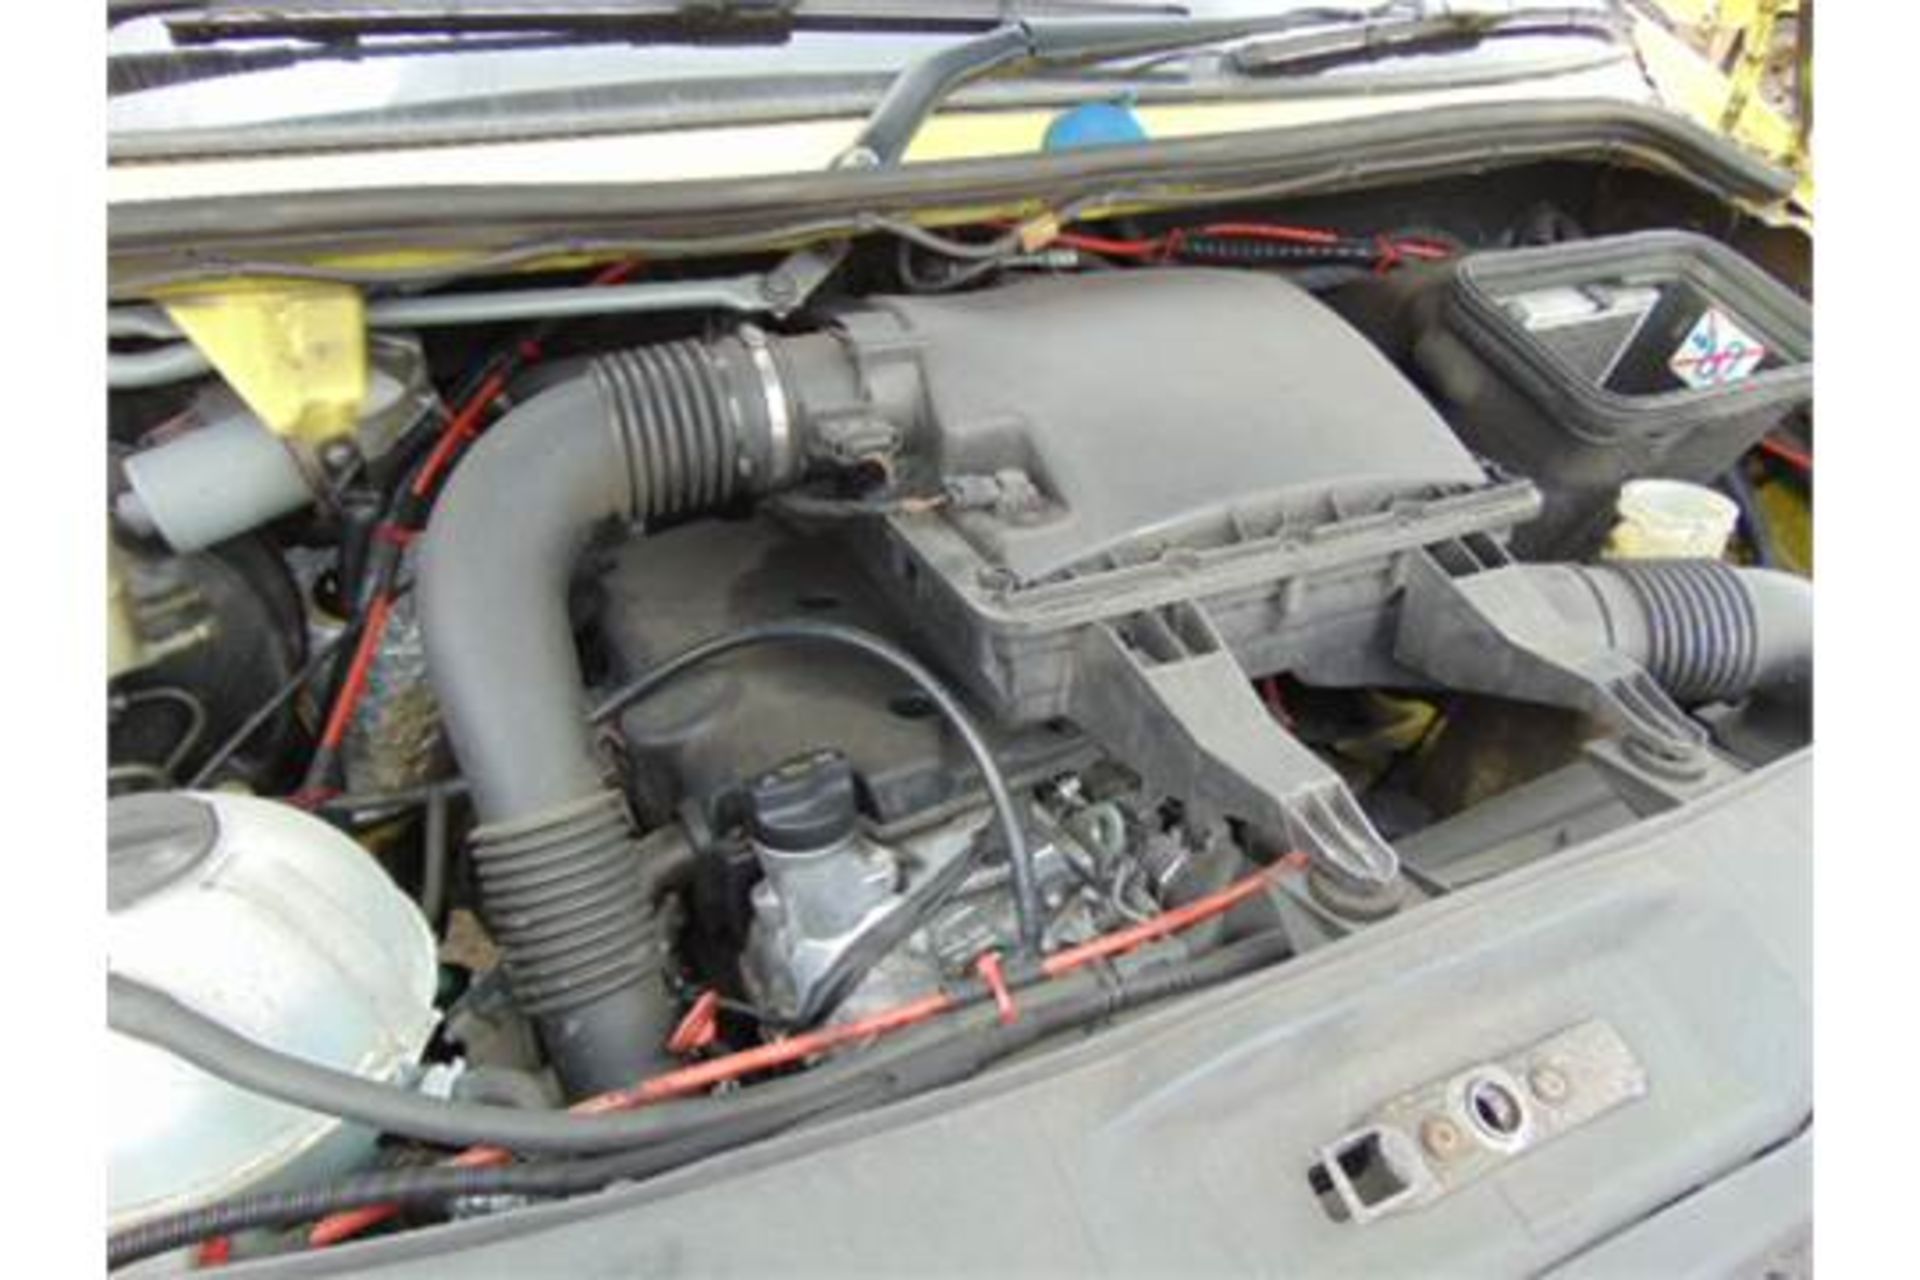 Mercedes Sprinter 515 CDI Turbo diesel ambulance - Image 20 of 21